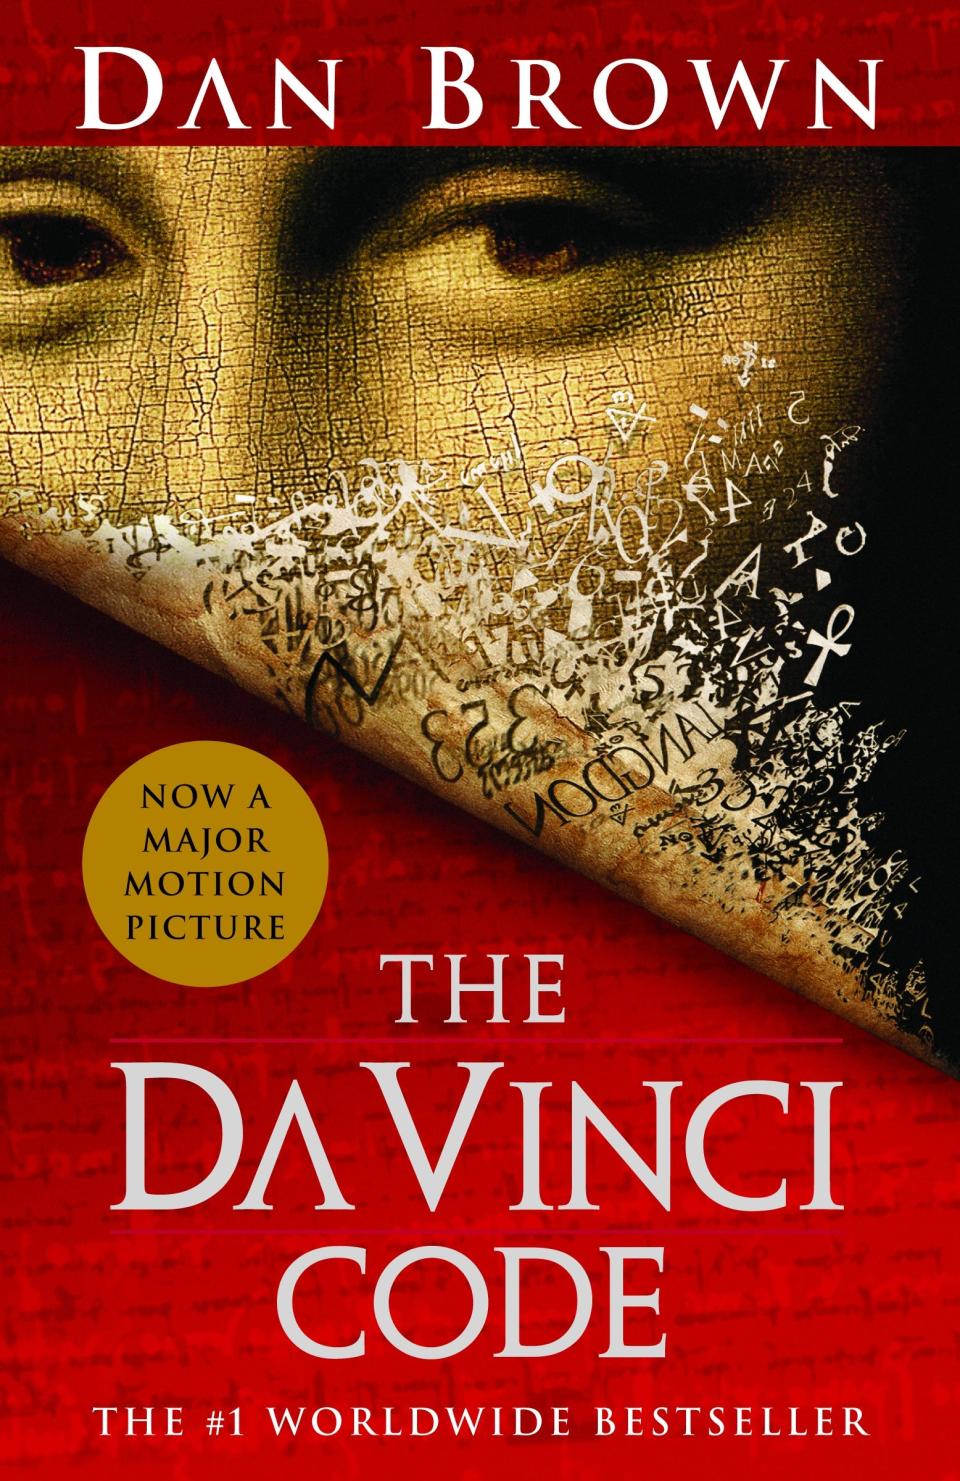 Dan Brown's "The Da Vinci Code" was the runaway best-seller that got the world interested in the adventures of Robert Langdon.